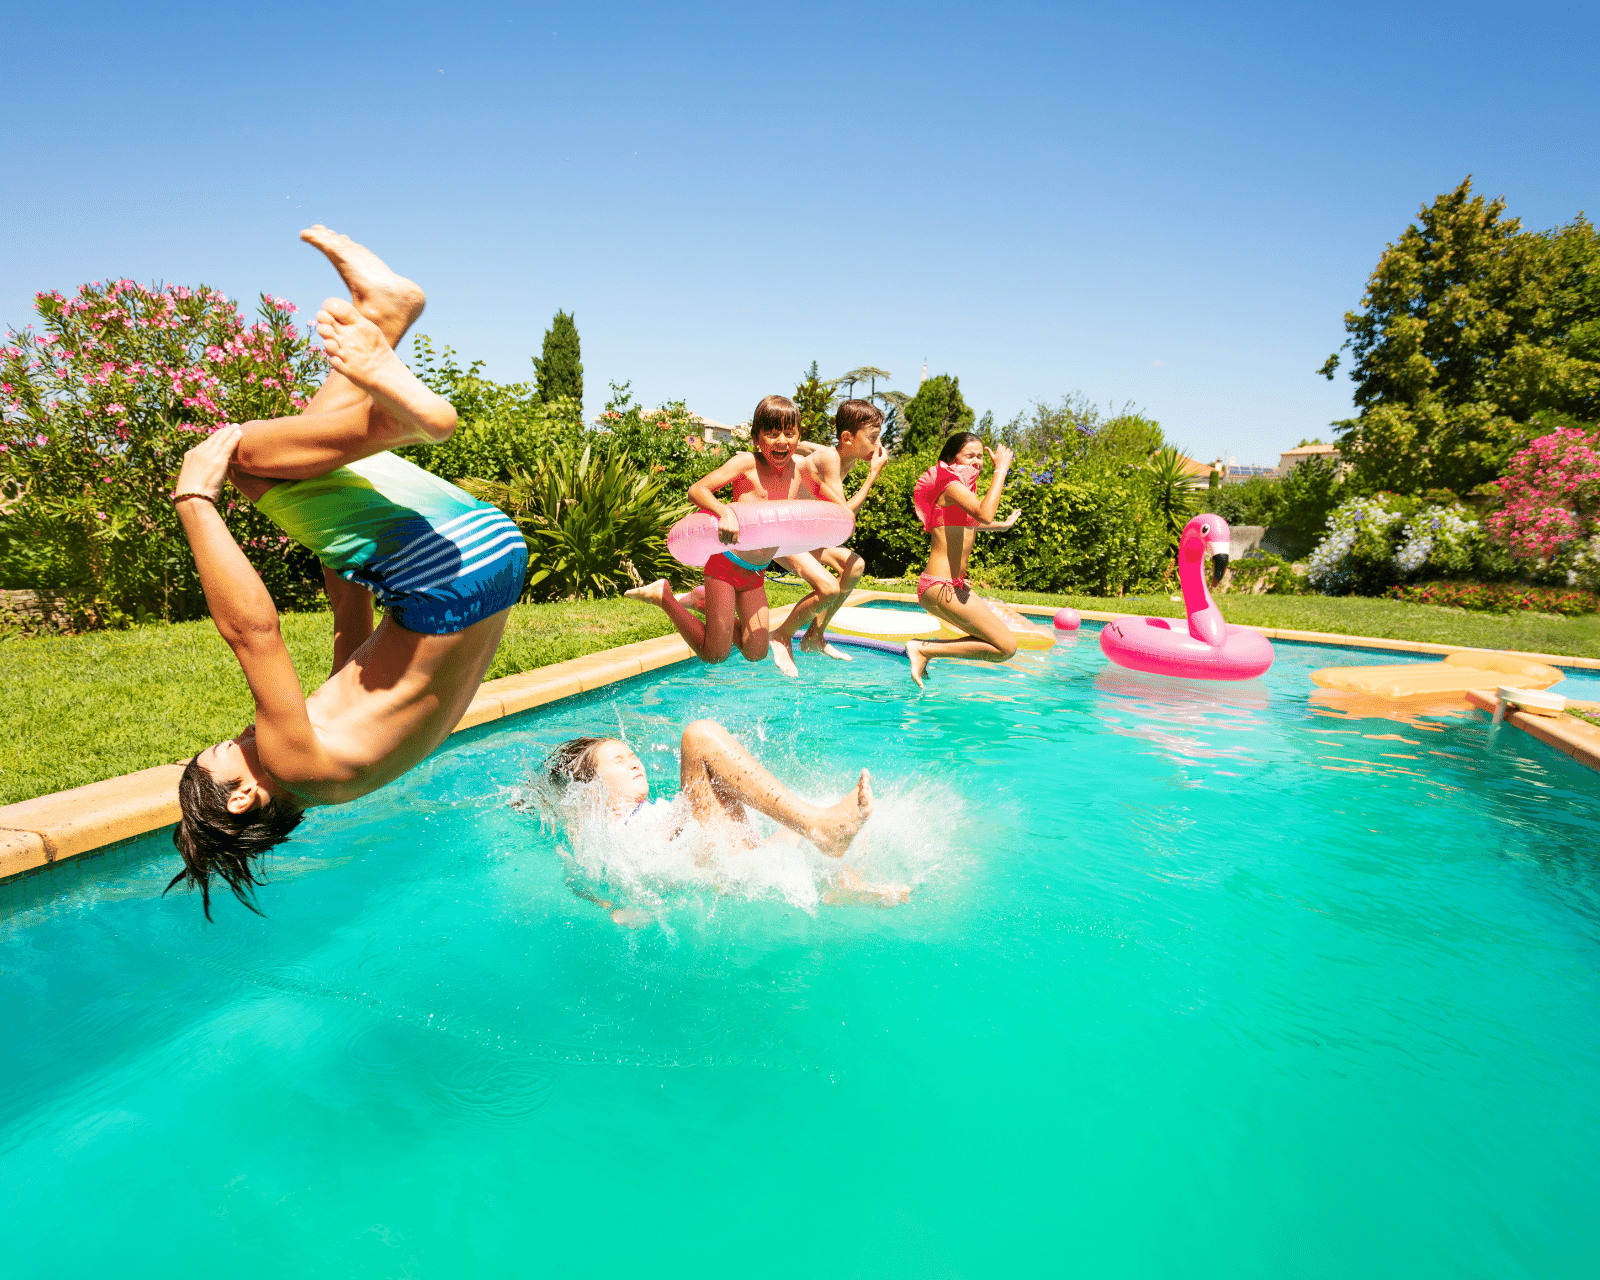 Kids jumping in pool